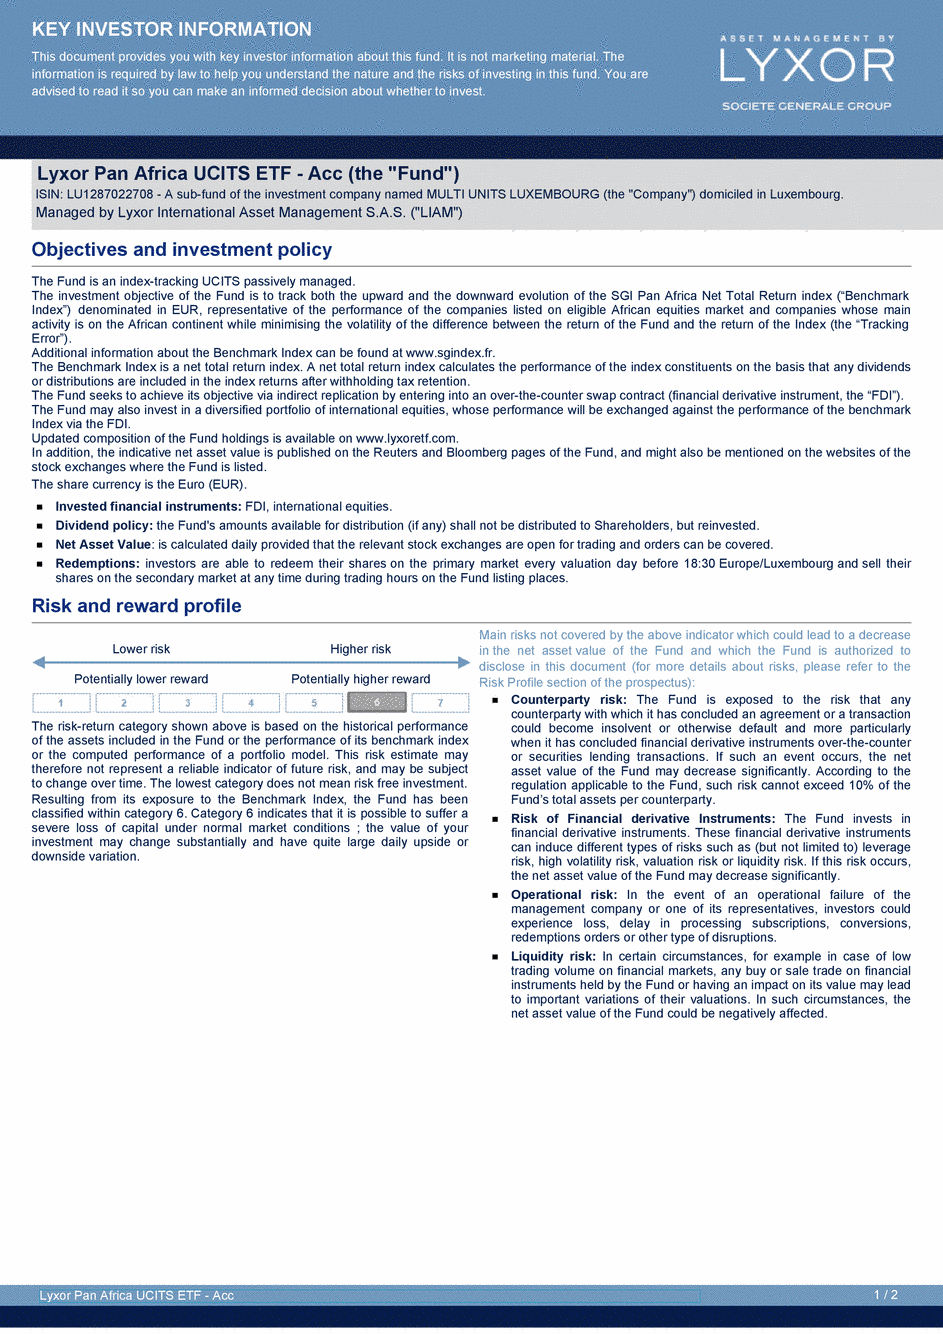 DICI Lyxor Pan Africa UCITS ETF - Acc - 19/02/2021 - Anglais